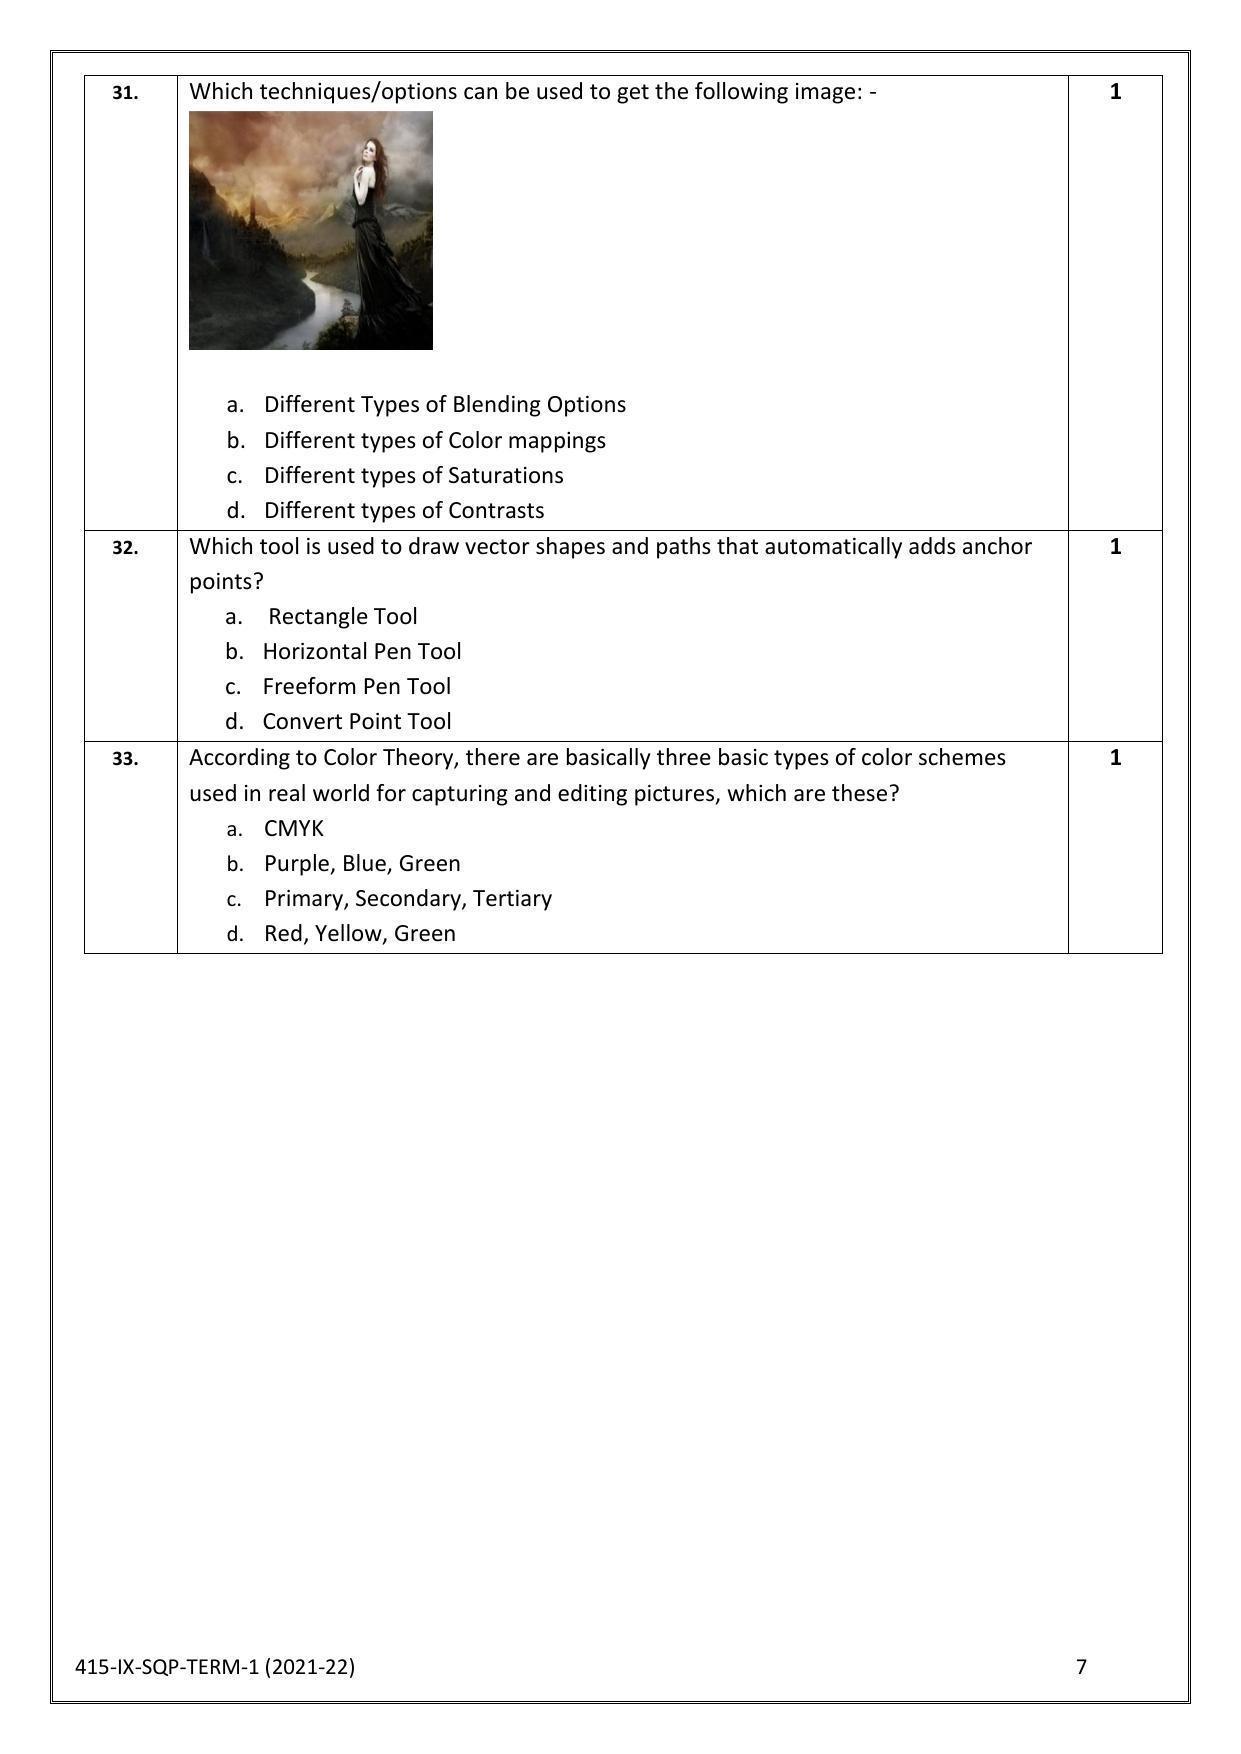 CBSE Class 10 Skill Education (Term I) - Multi Media Sample Paper 2021-22 - Page 7